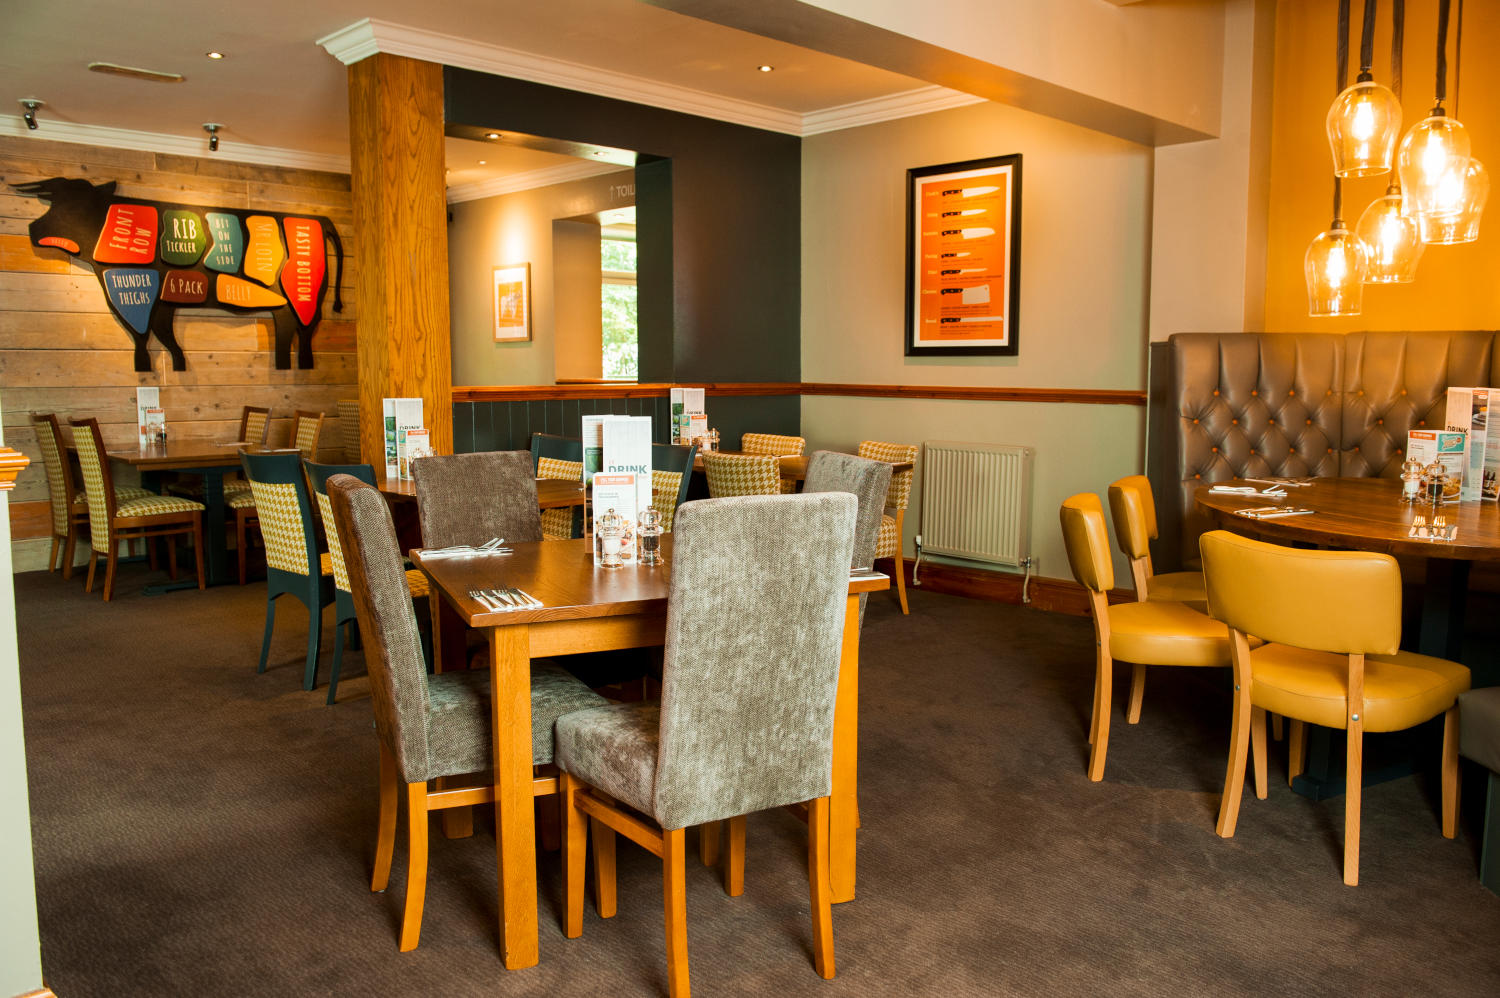 Beefeater restaurant Premier Inn Carlisle M6 J42 hotel Carlisle 03337 773986